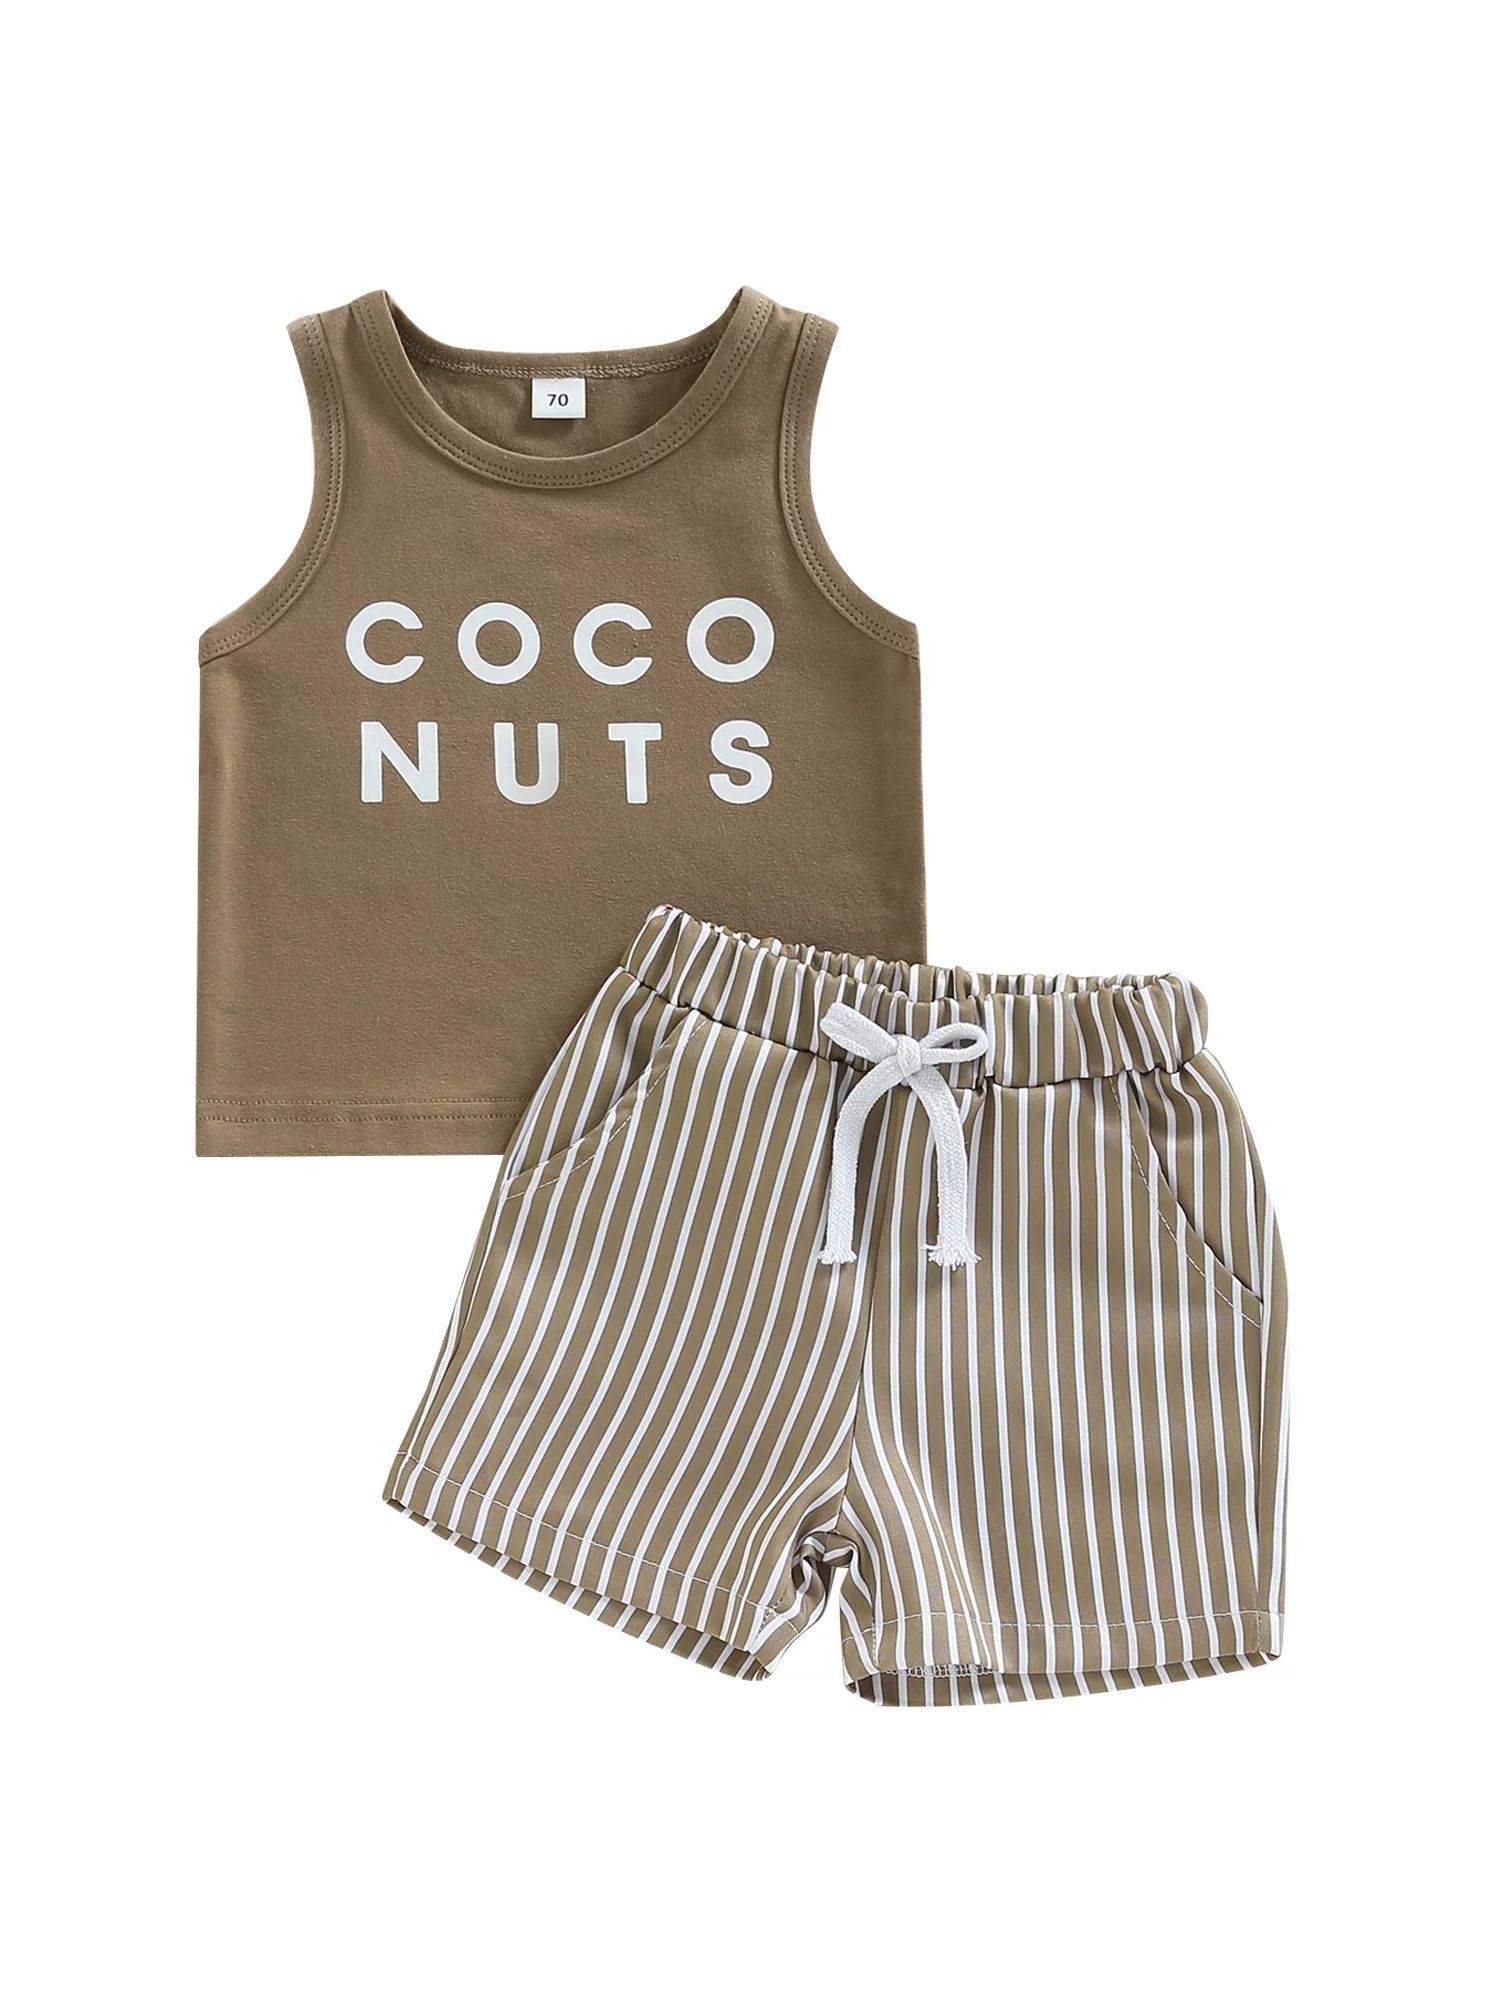 Gwiyeopda Toddler Boys Summer Clothes Kids Short Sleeve T-Shirt Tops and Shorts 2Pcs Outfit Set | Walmart (US)